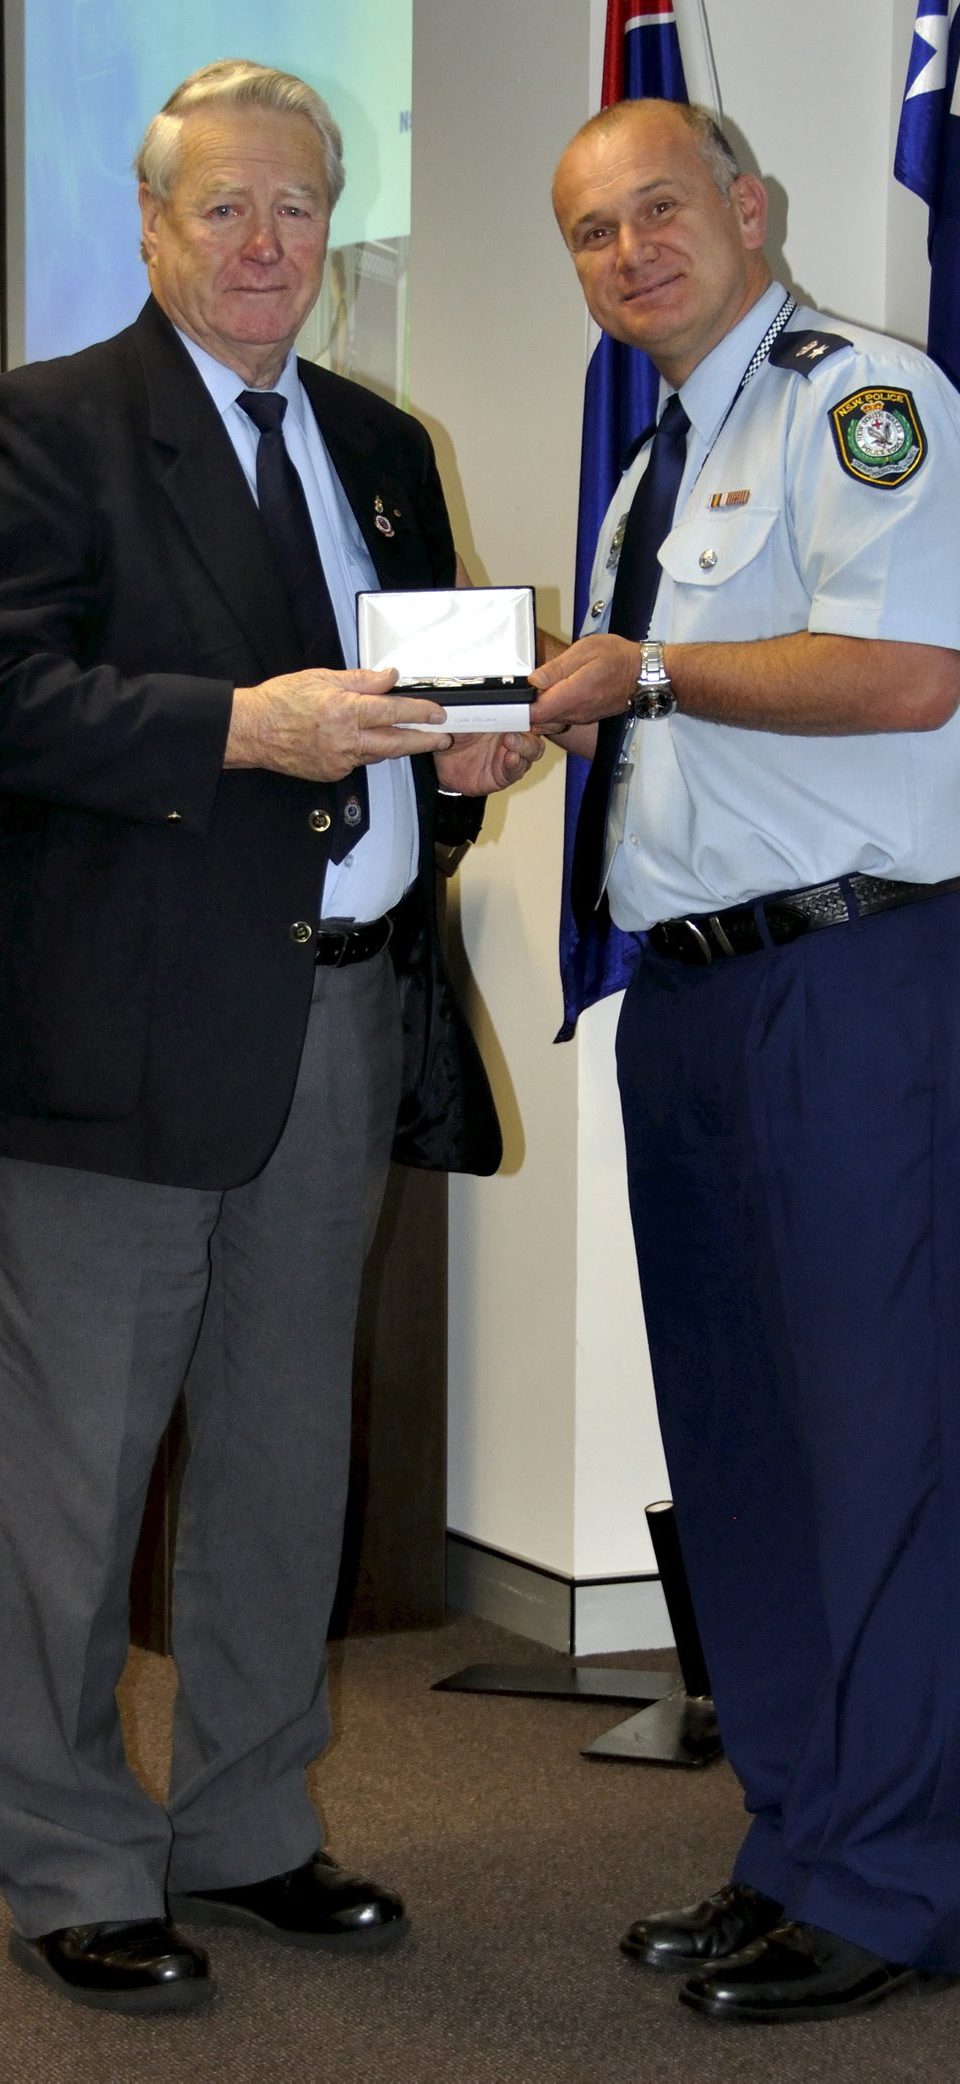 Gordon WEAVER accepting his Medal.